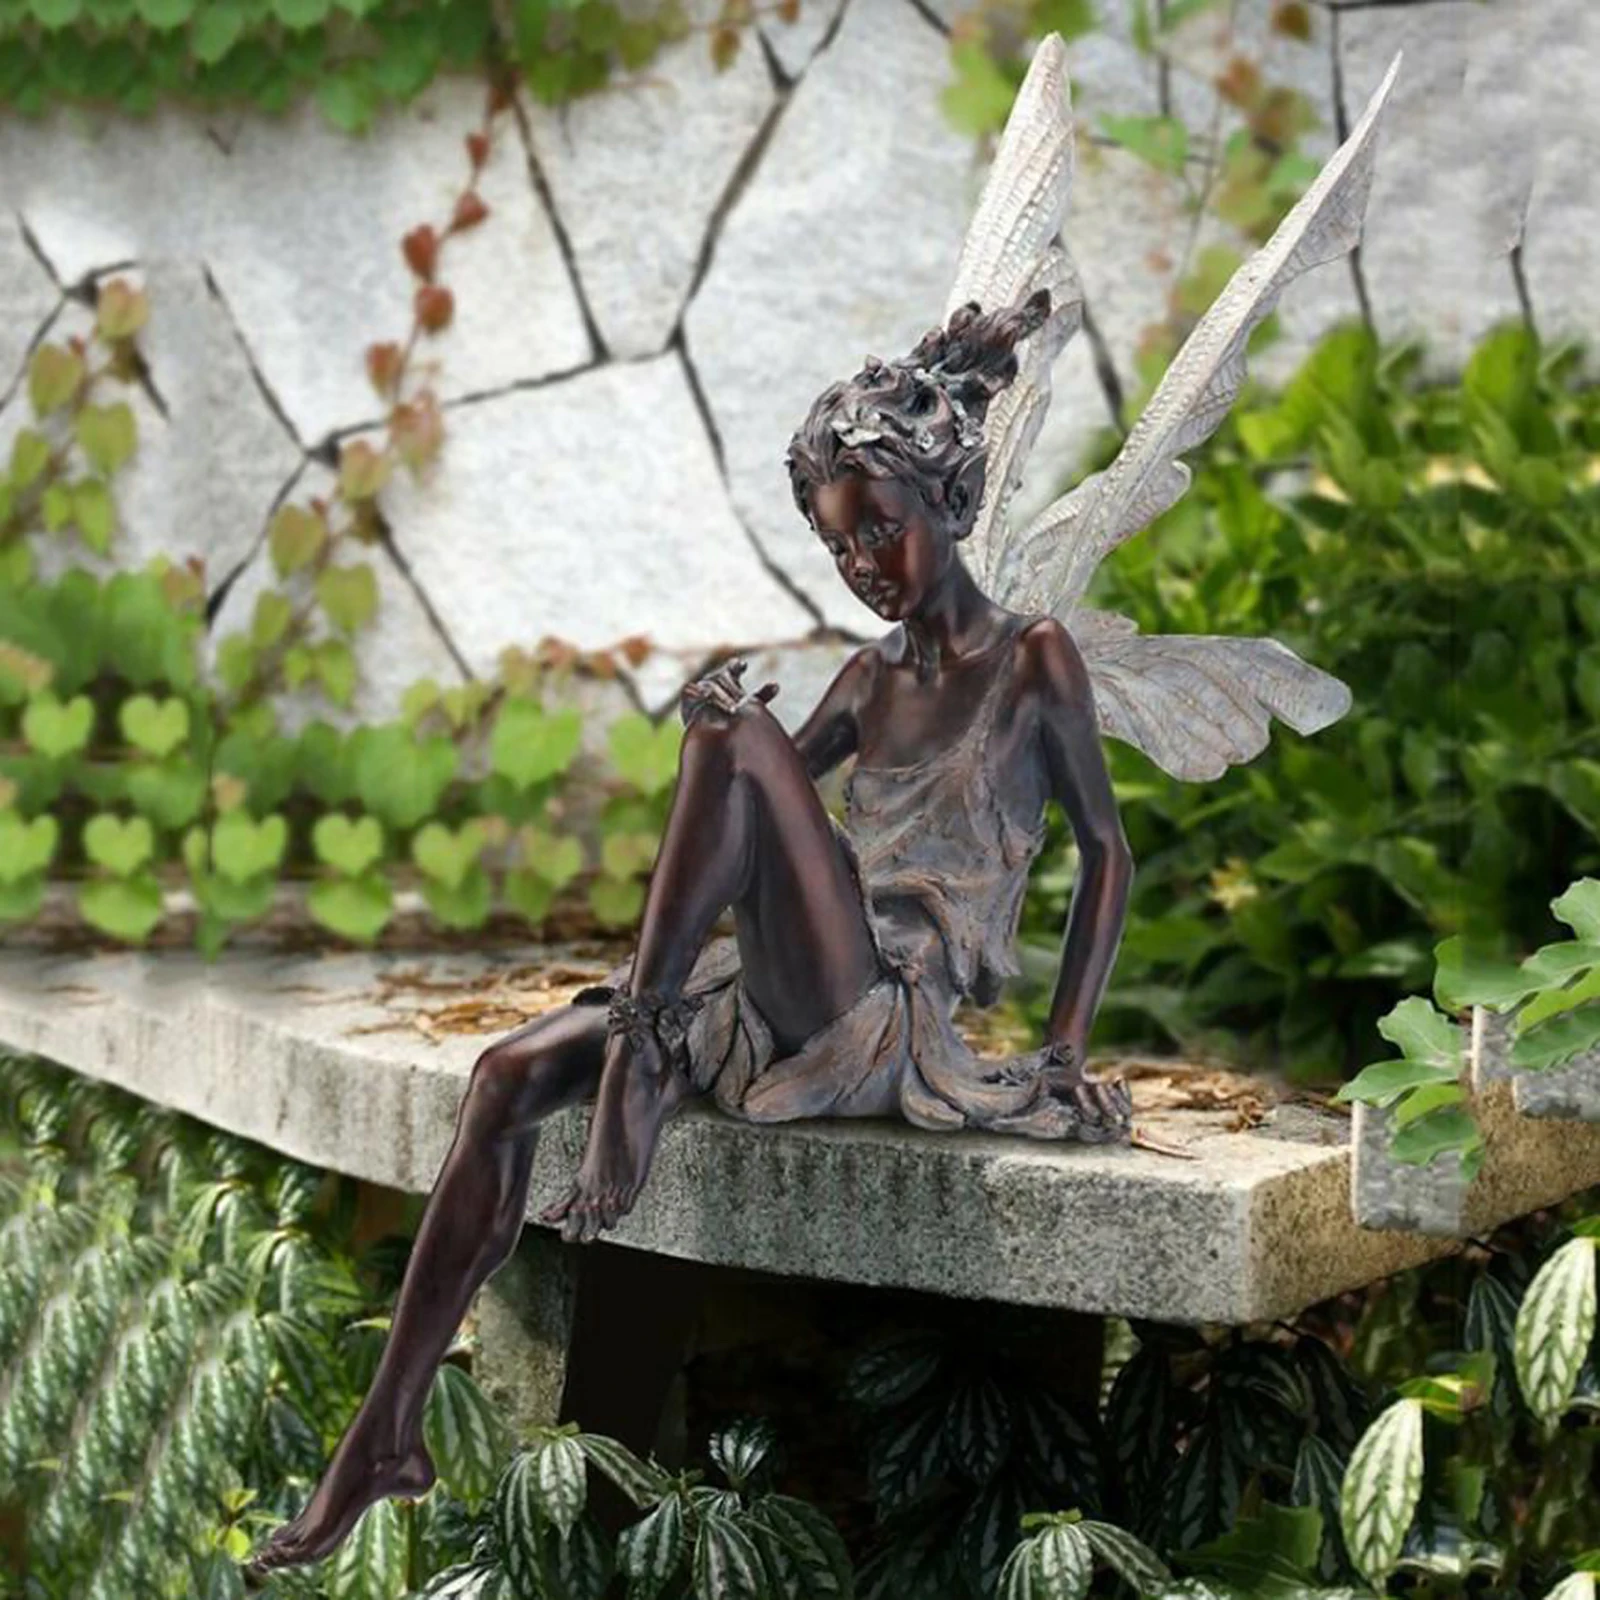 Sitting Fairy Statue Garden Ornament Resin Craft Landscaping Home Yard Decor AU